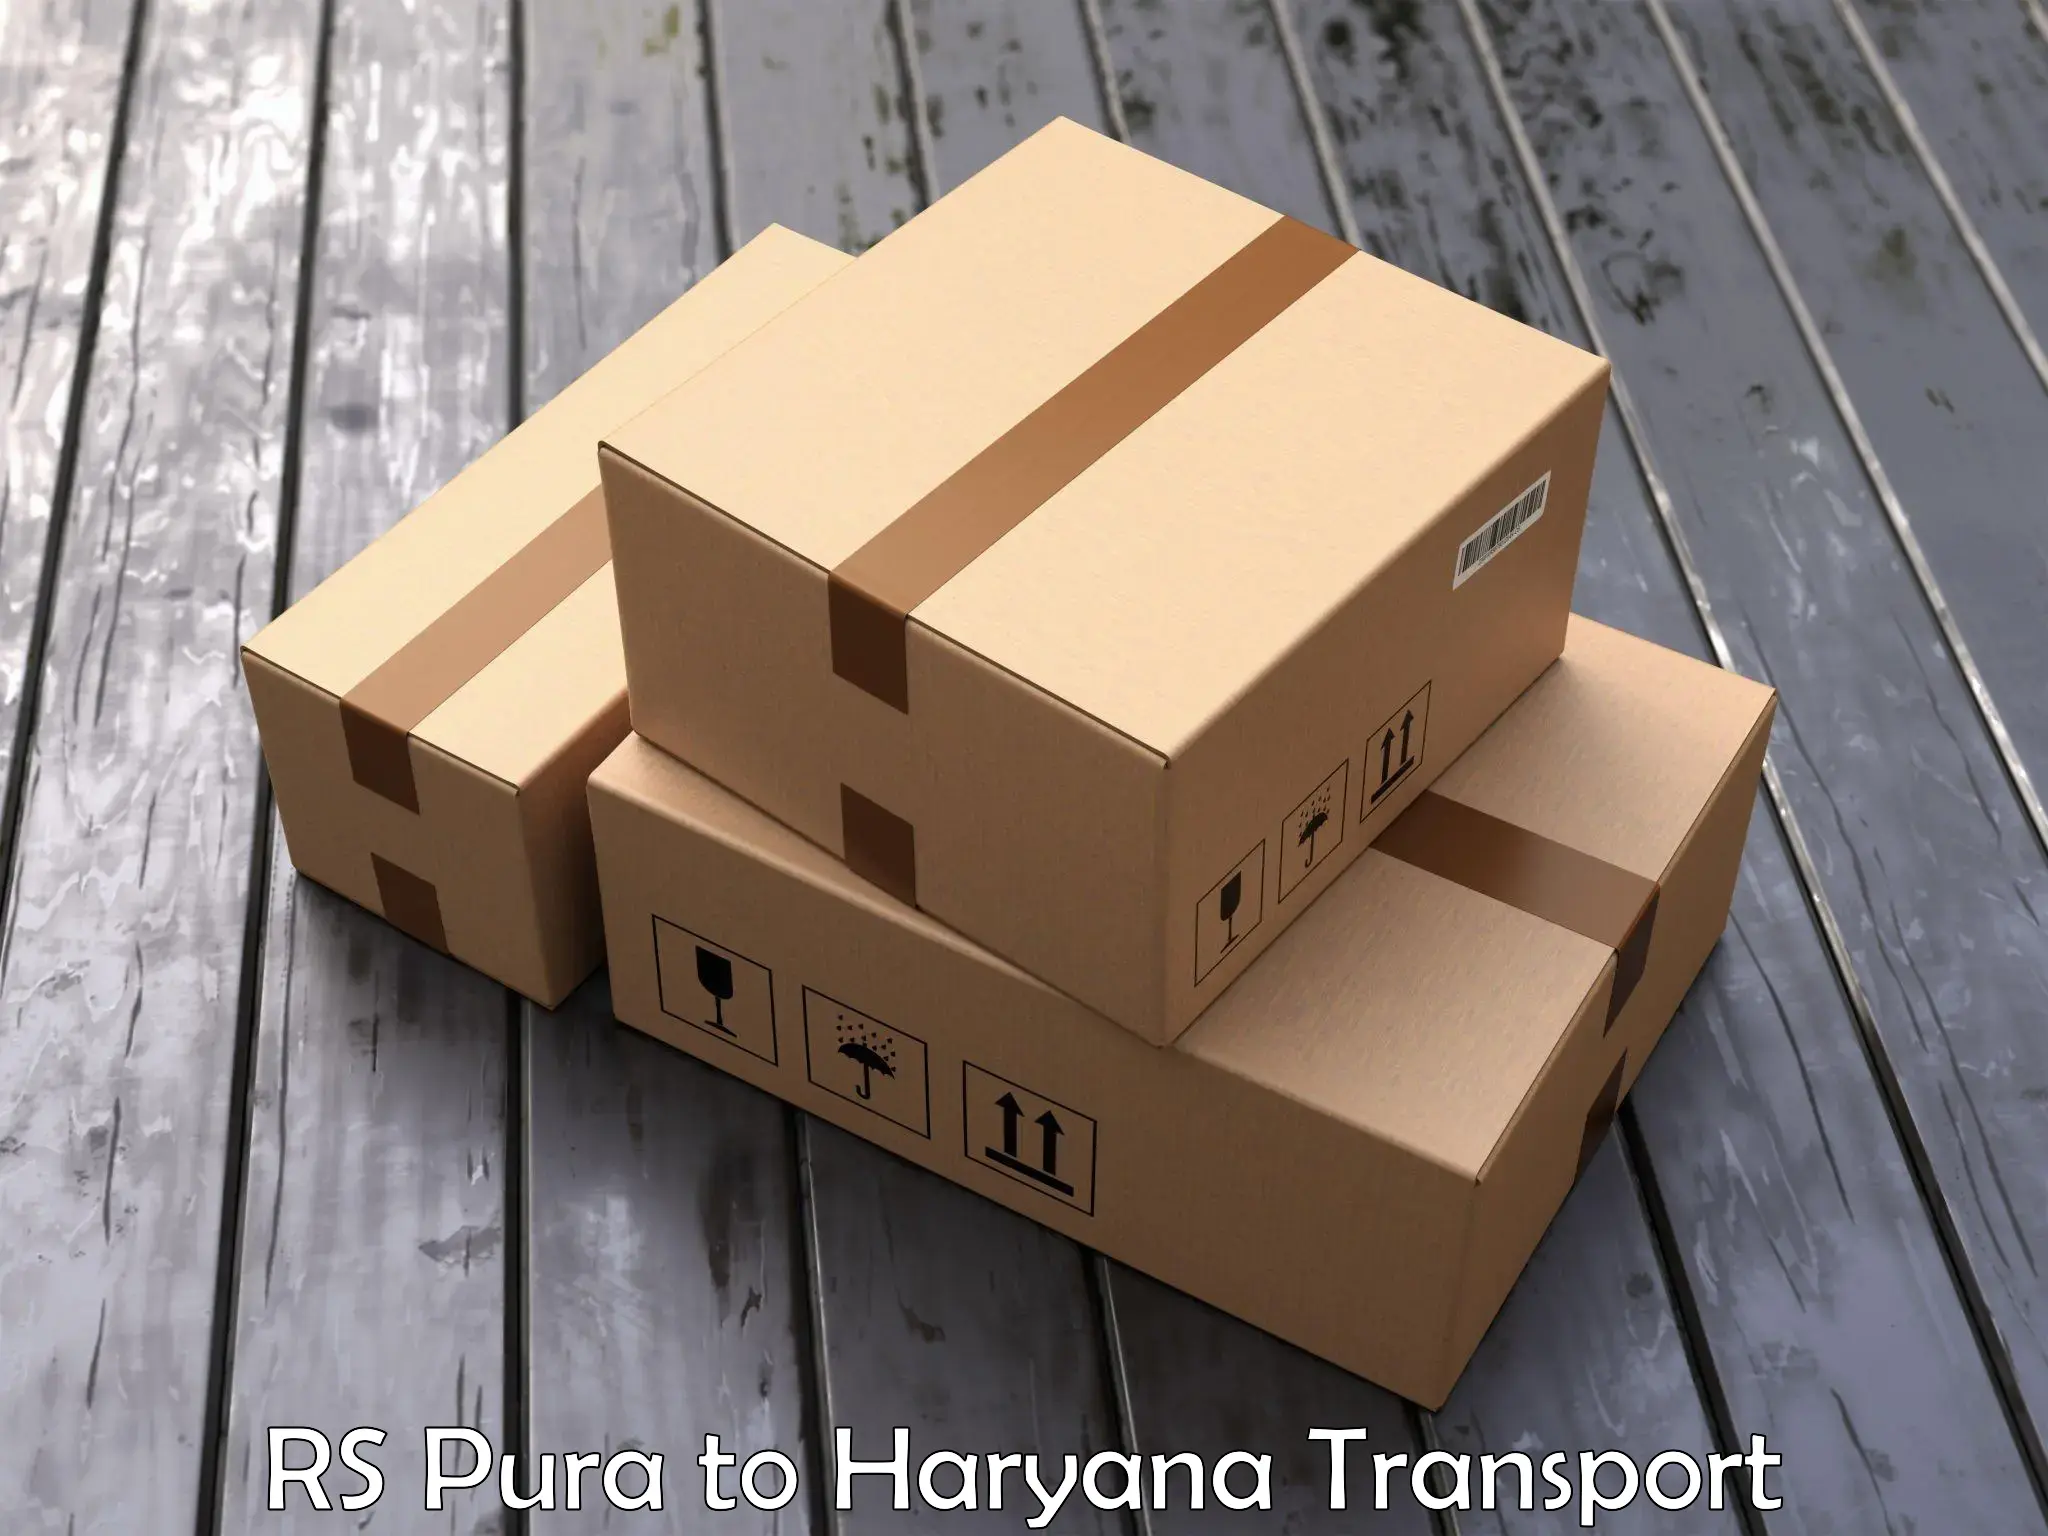 Furniture transport service RS Pura to Narwana